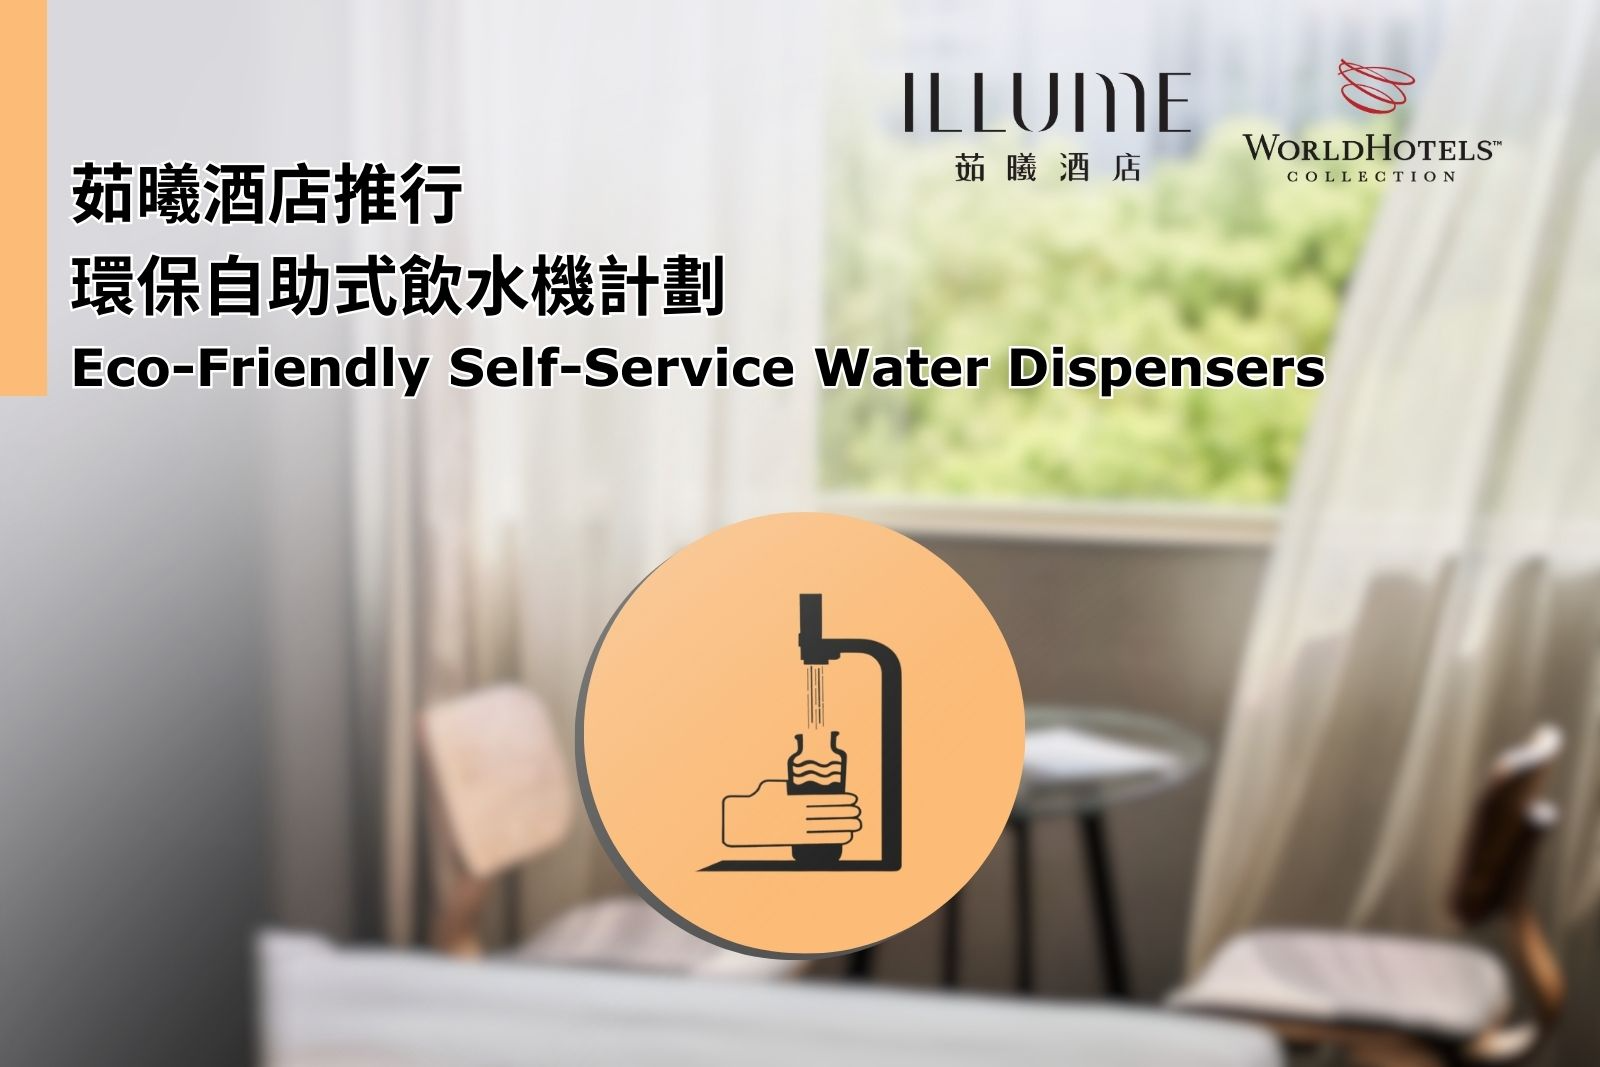 ILLUME TAIPEI Introduces Eco-Friendly Self-Service Water Dispensers